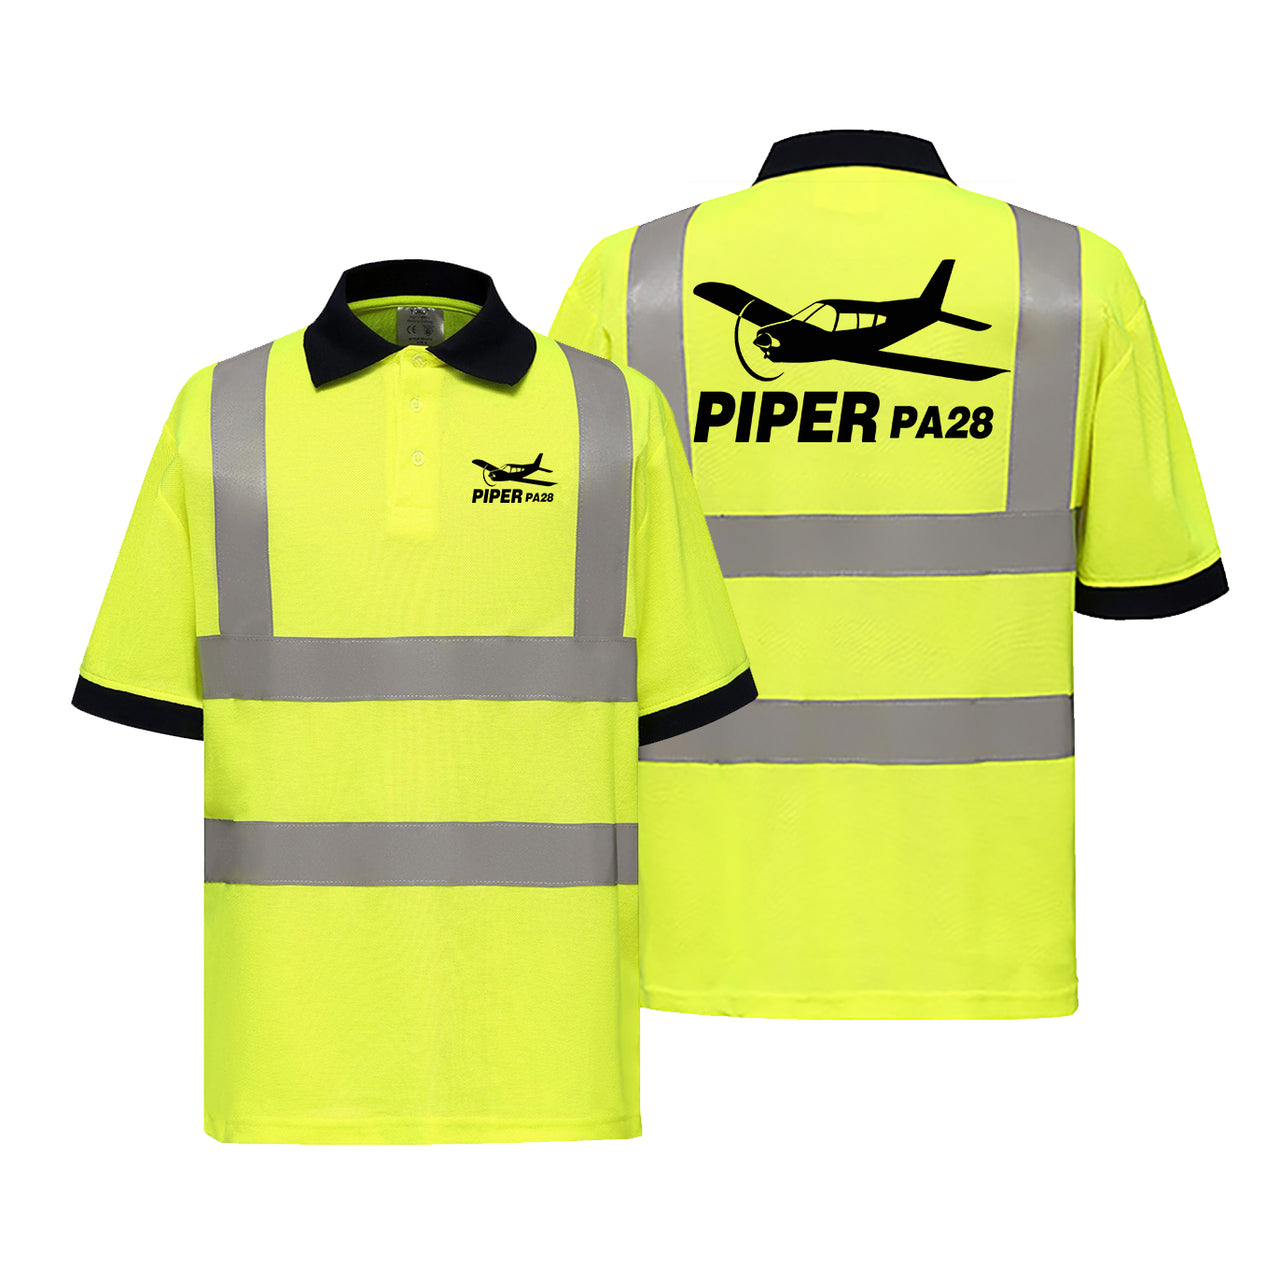 The Piper PA28 Designed Reflective Polo T-Shirts